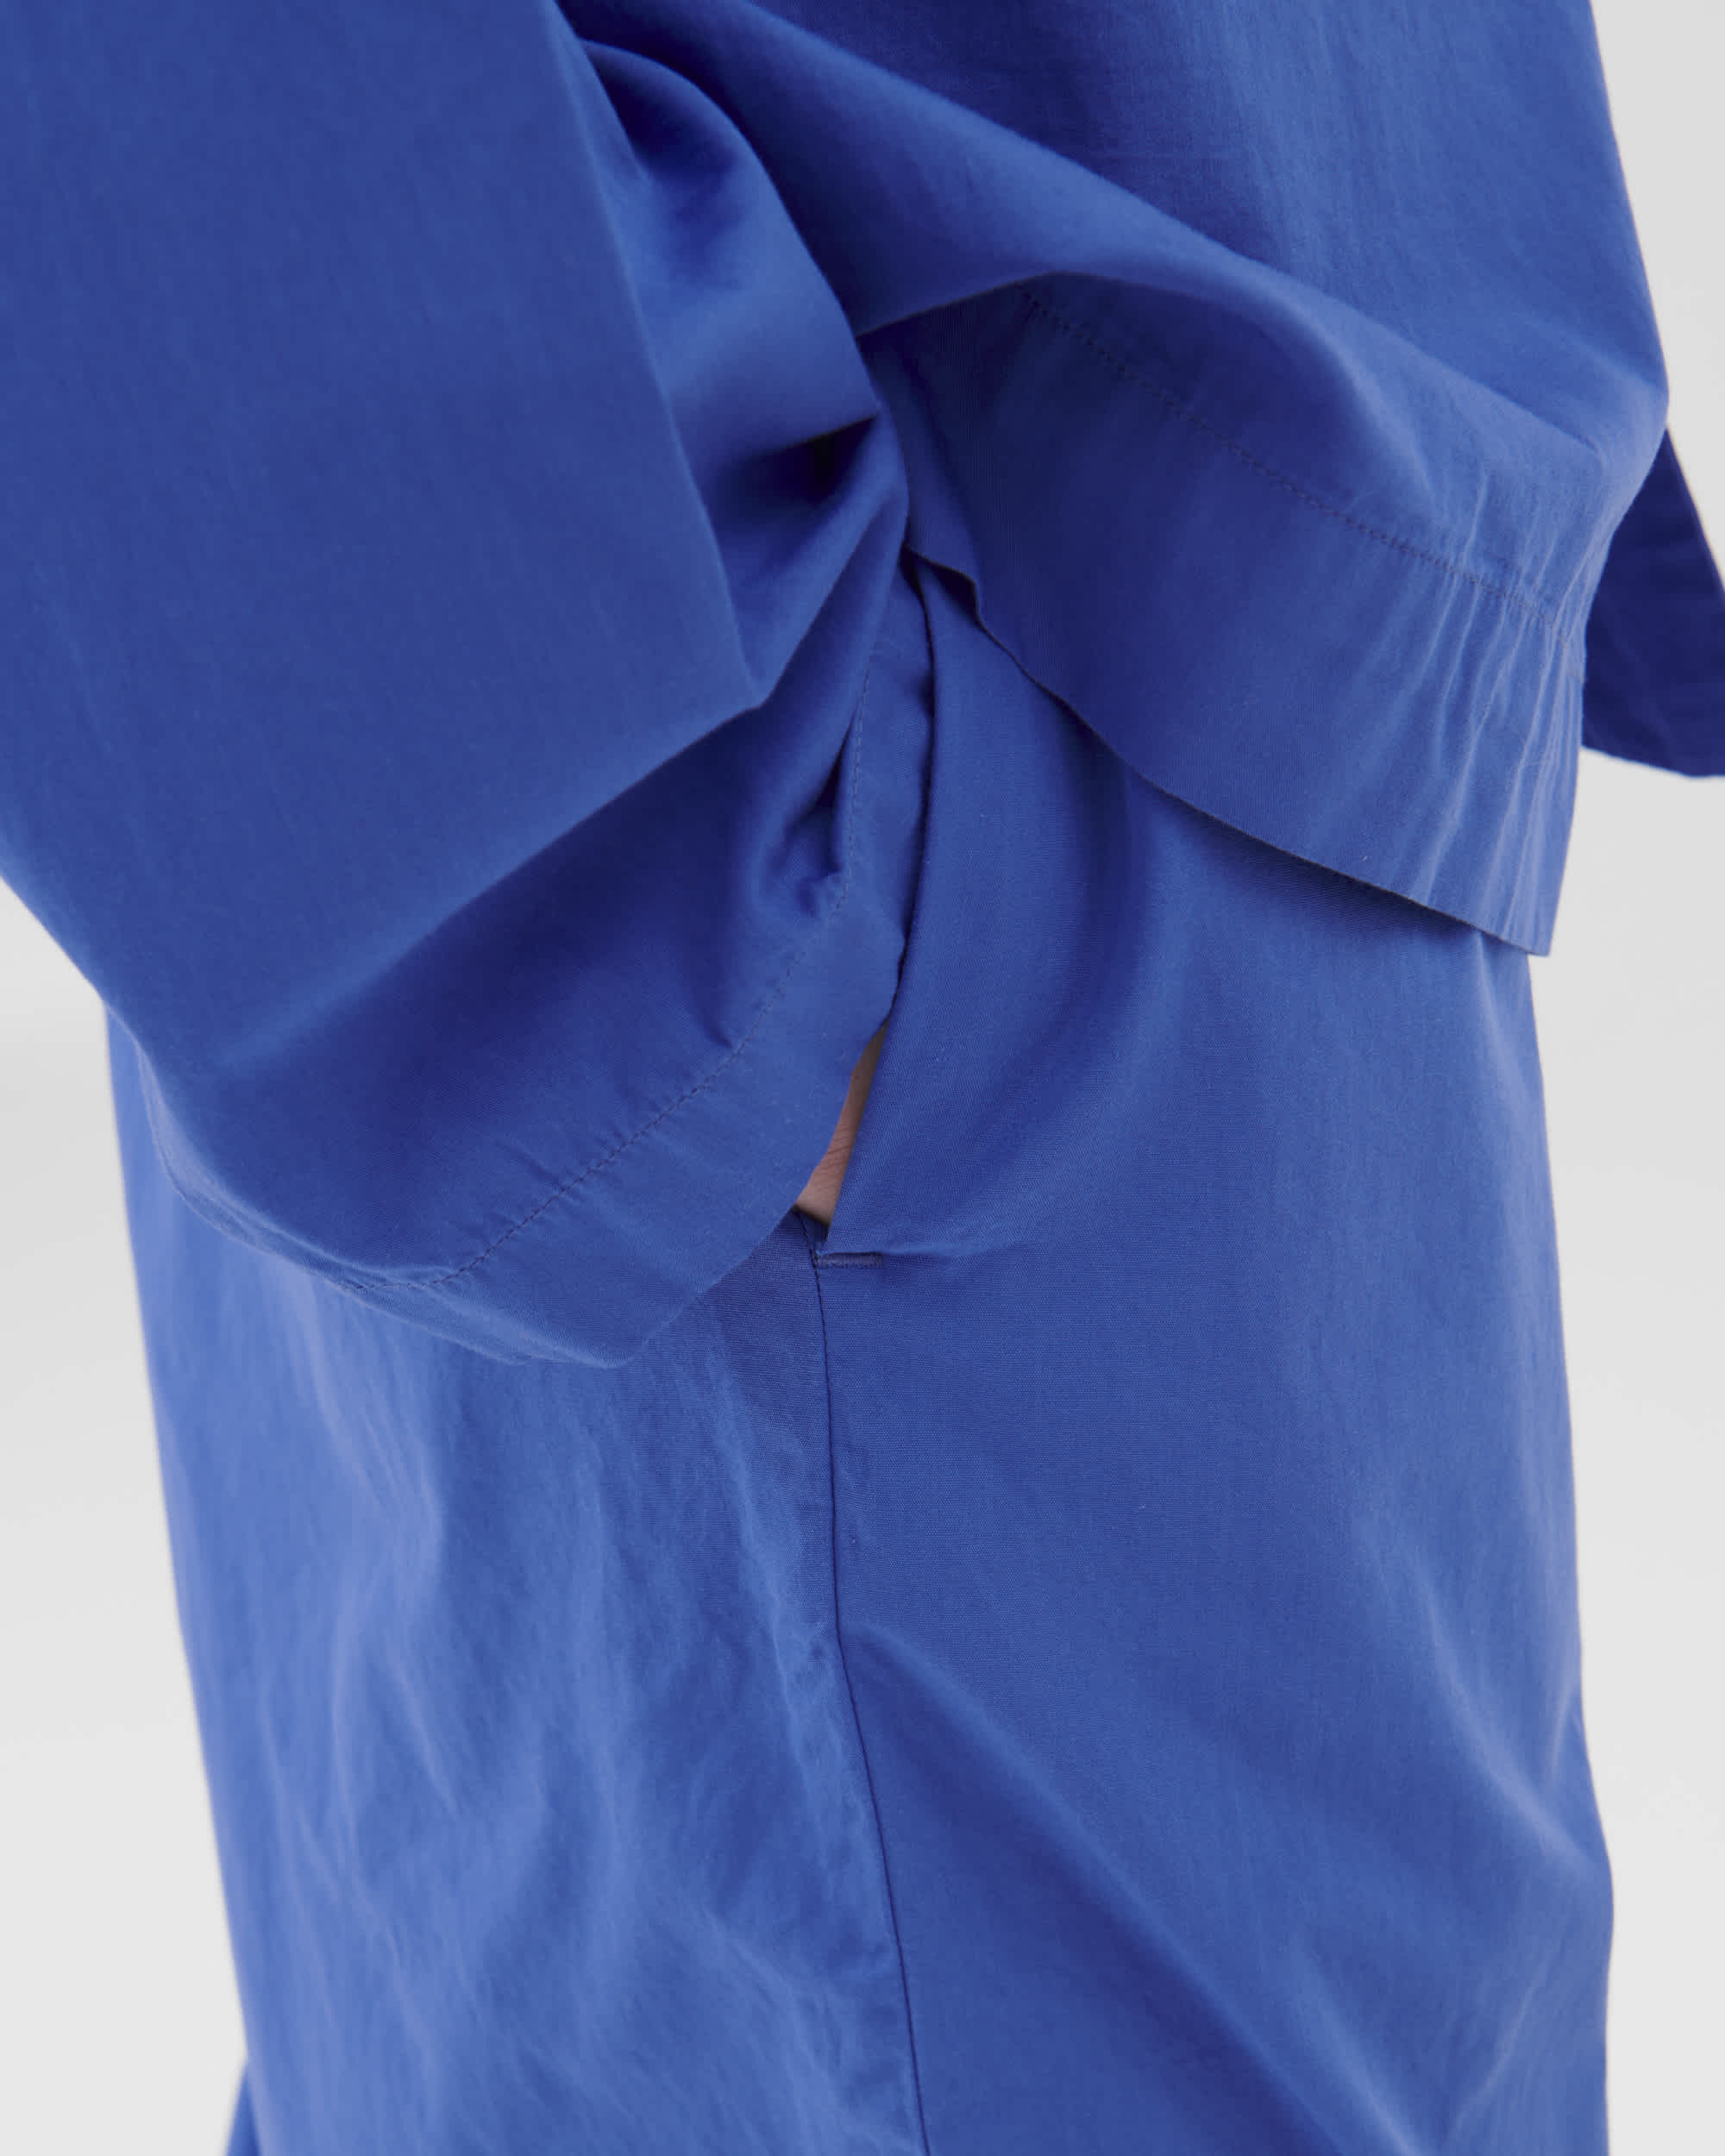 Sleepwear (Poplin) L/S Shirt - Royal Blue